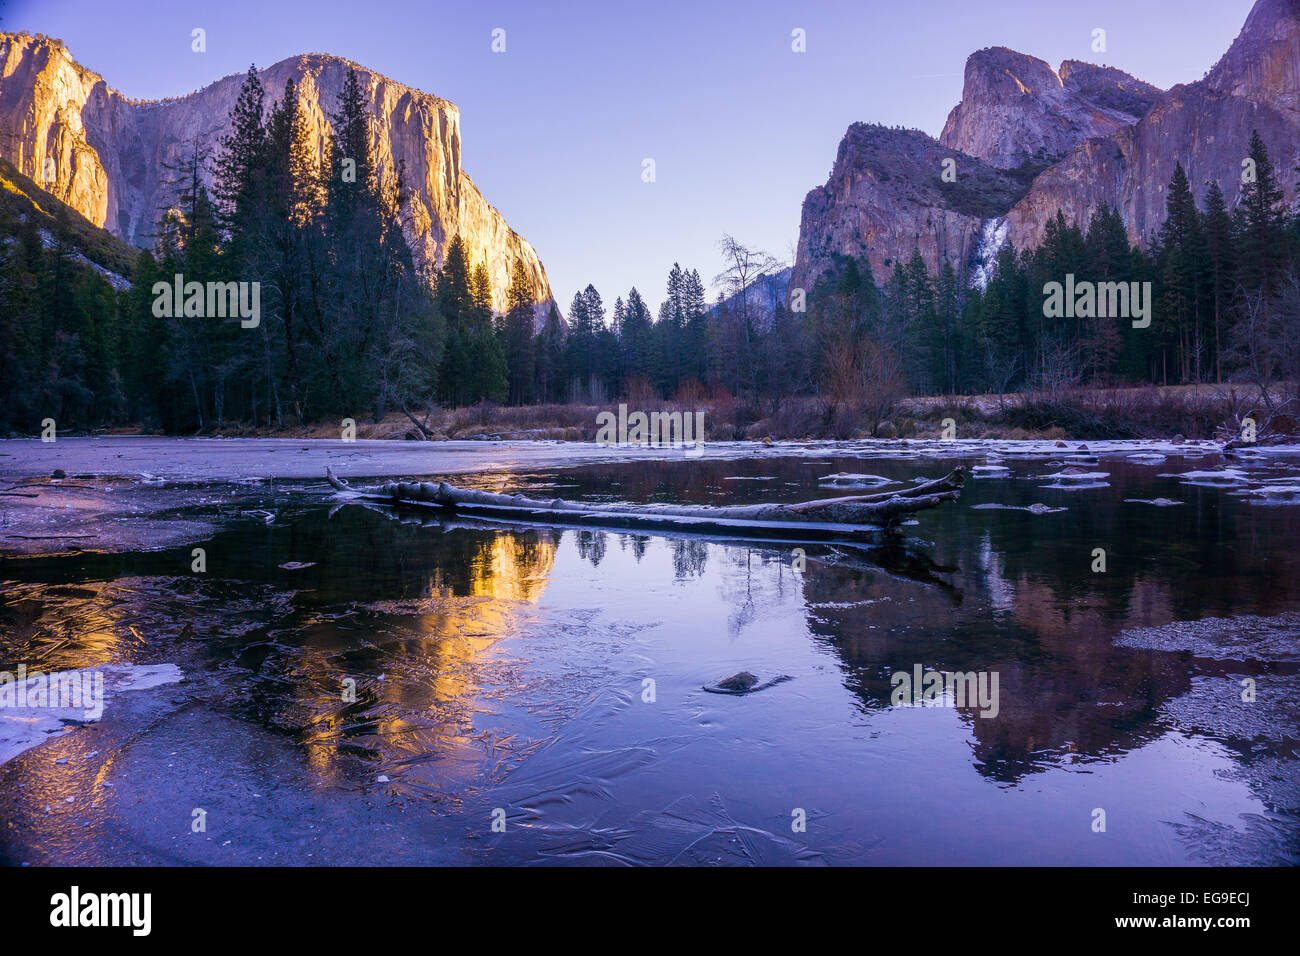 USA, California, Yosemite National Park, Yosemite Valley at sunrise Stock Photo